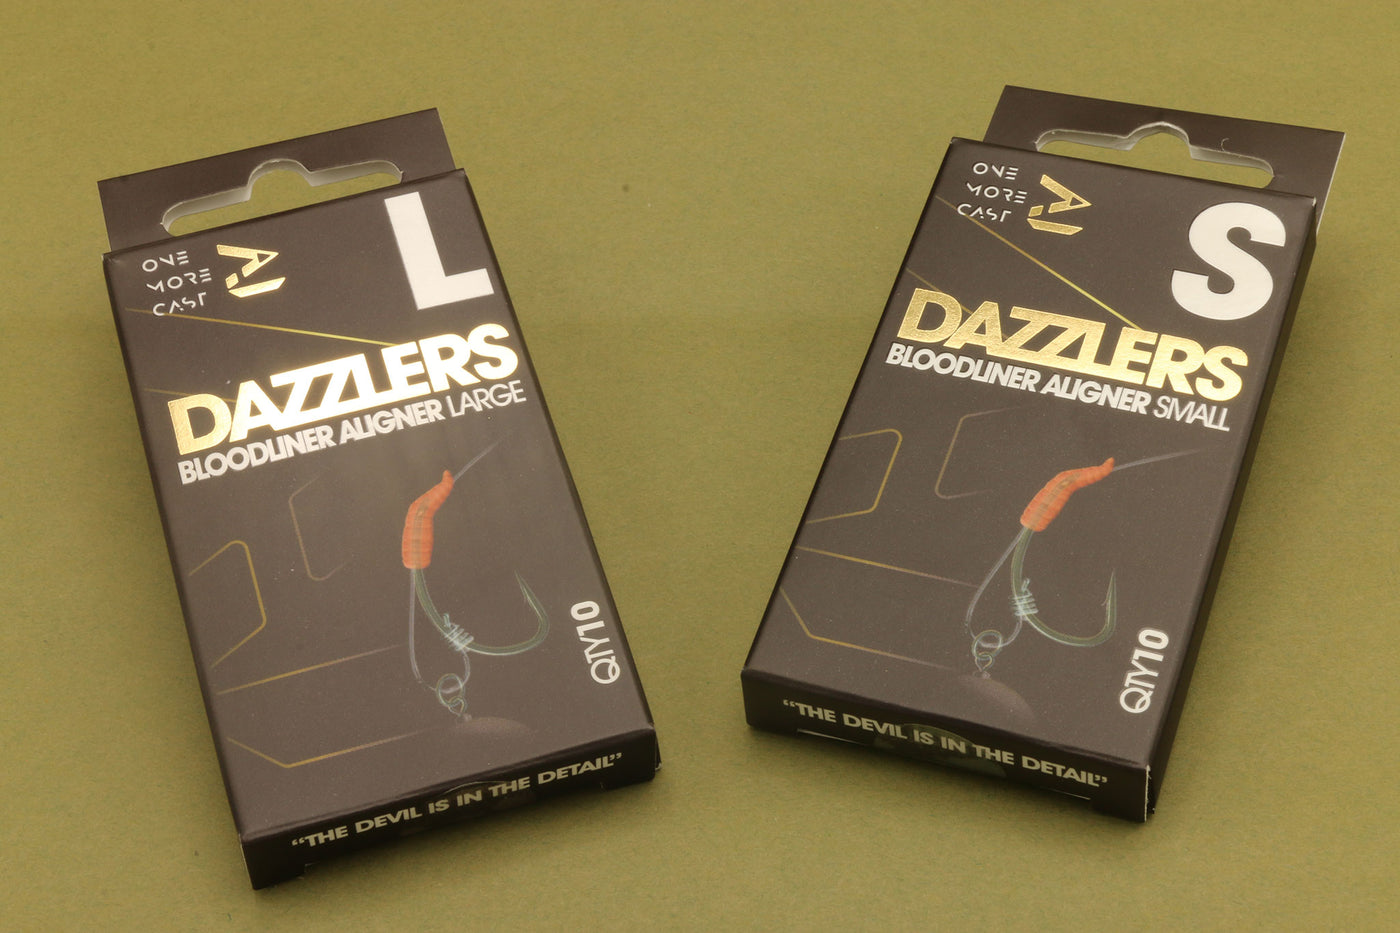 Dazzlers Bloodliners - Aligner